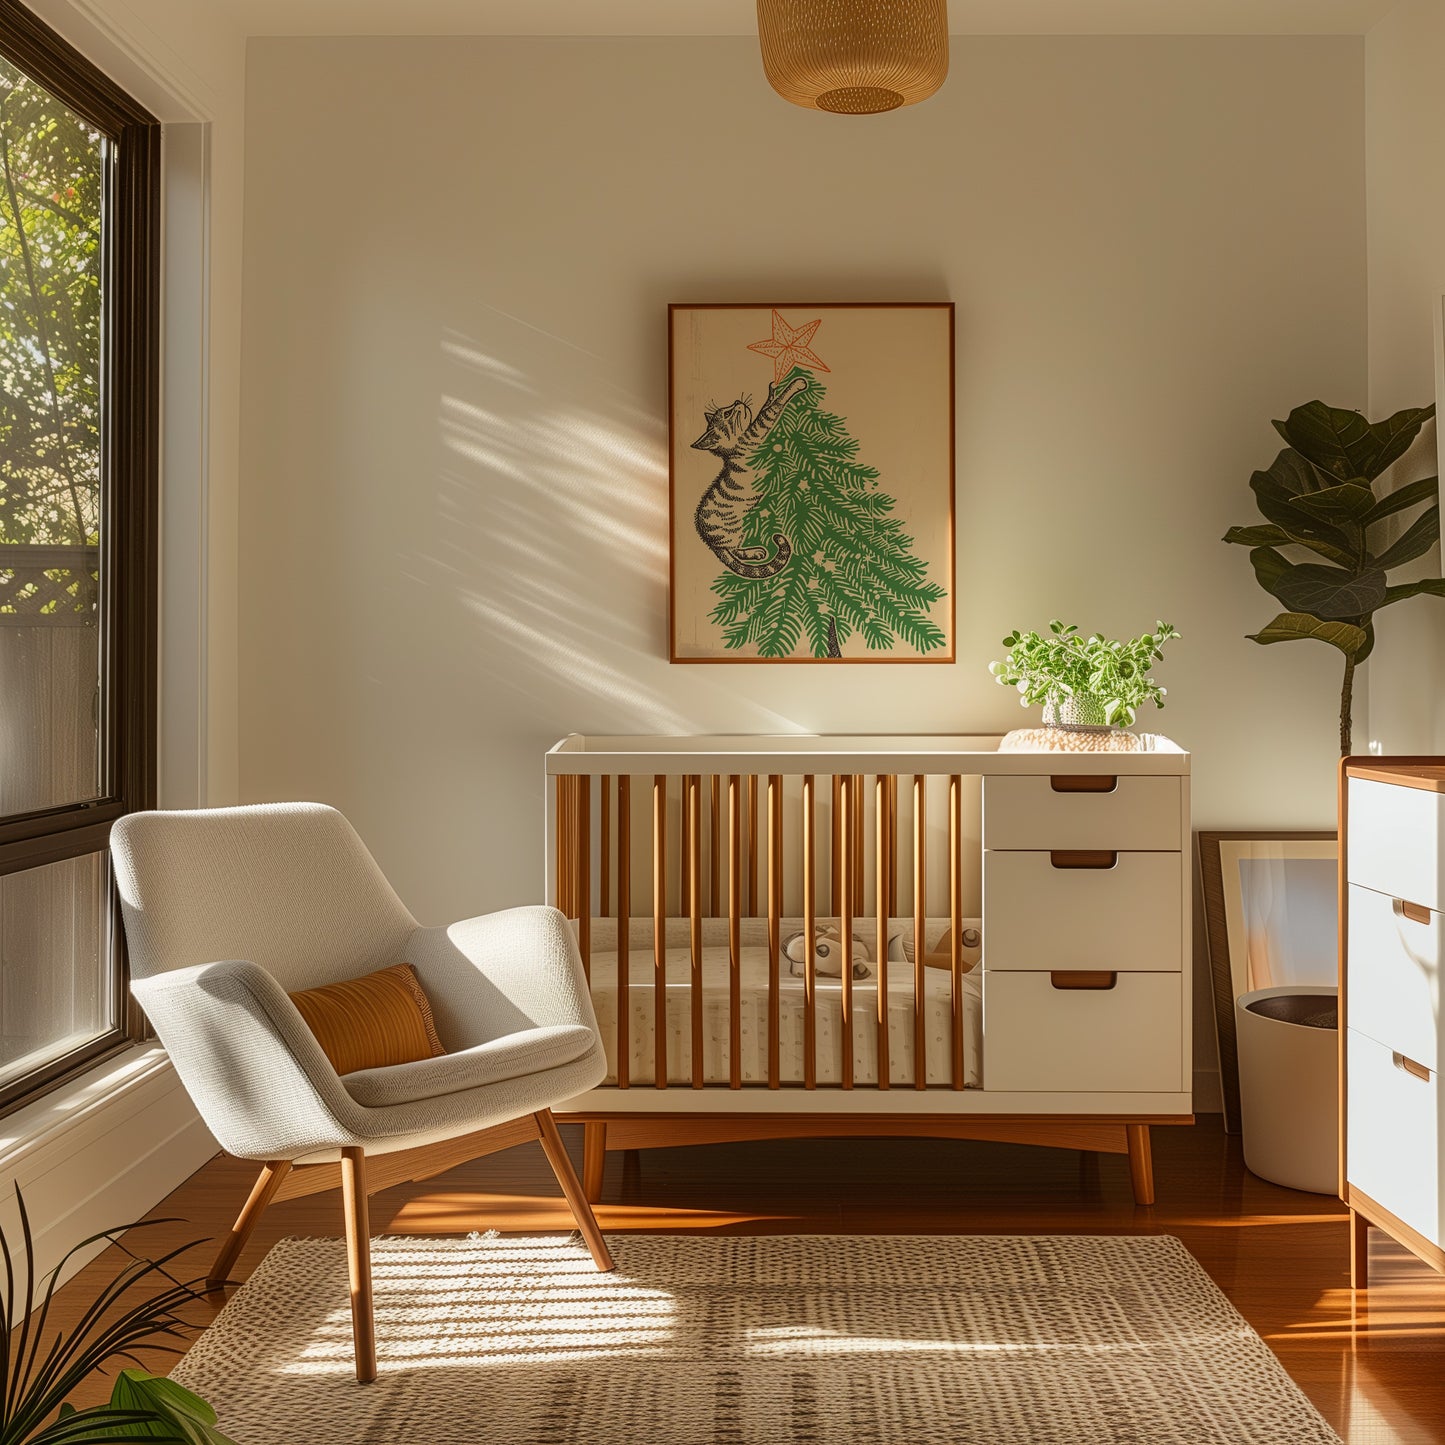 Sunny nursery with a crib, armchair, plant, and framed artwork on the wall.